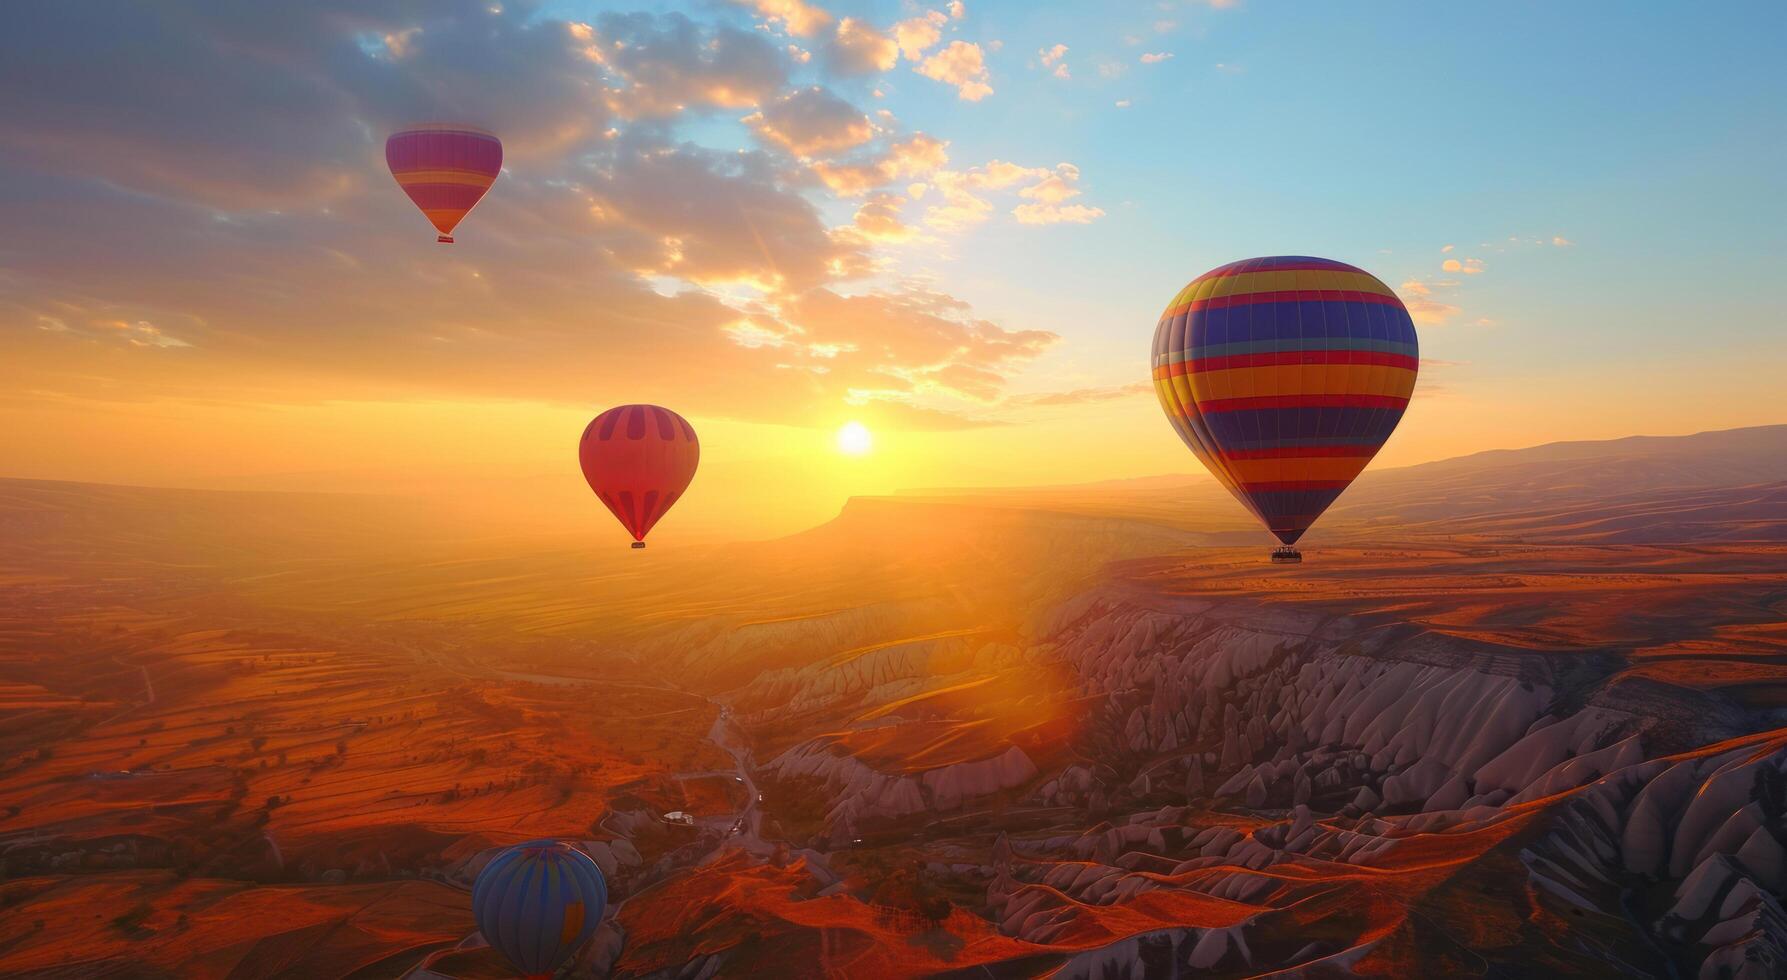 ai generiert heiß Luft Luftballons fliegend über hoch Hügel, Plateau, Sonnenaufgang Ballon foto